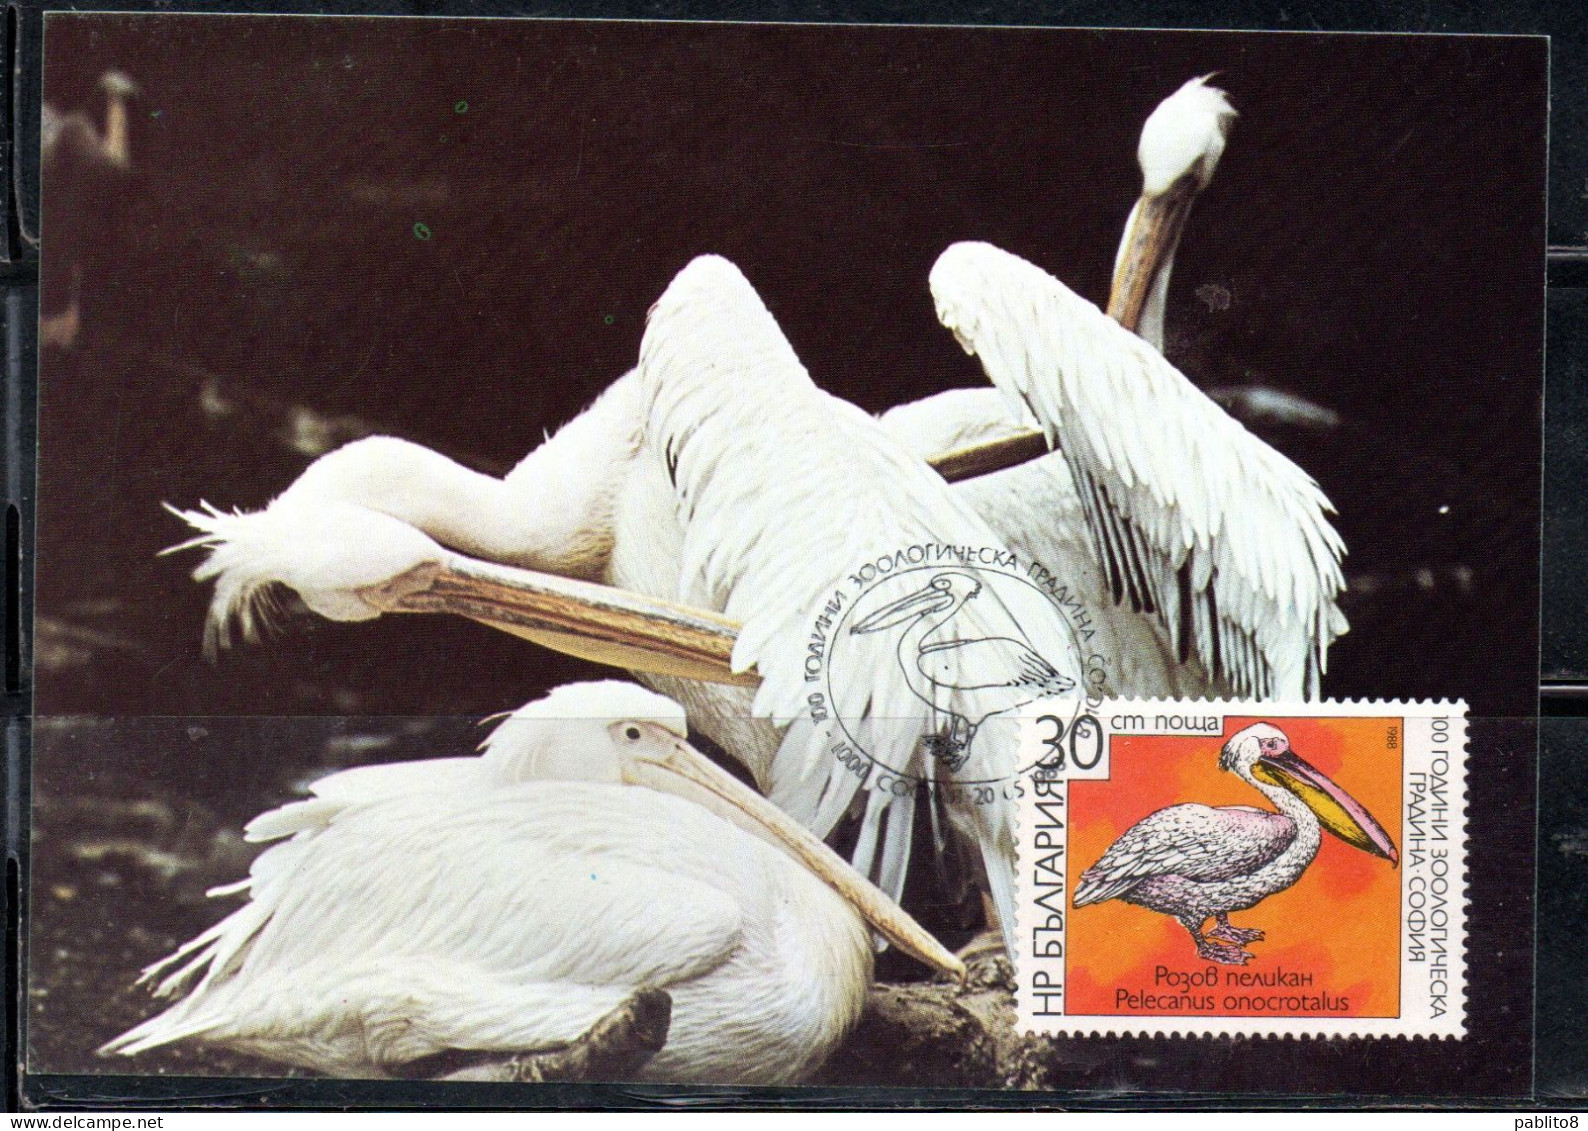 BULGARIA BULGARIE BULGARIEN 1988 BIRDS FAUNA GREAT WHITE PELECANUS PELLICANO BIRD 30s MAXI MAXIMUM CARD - FDC